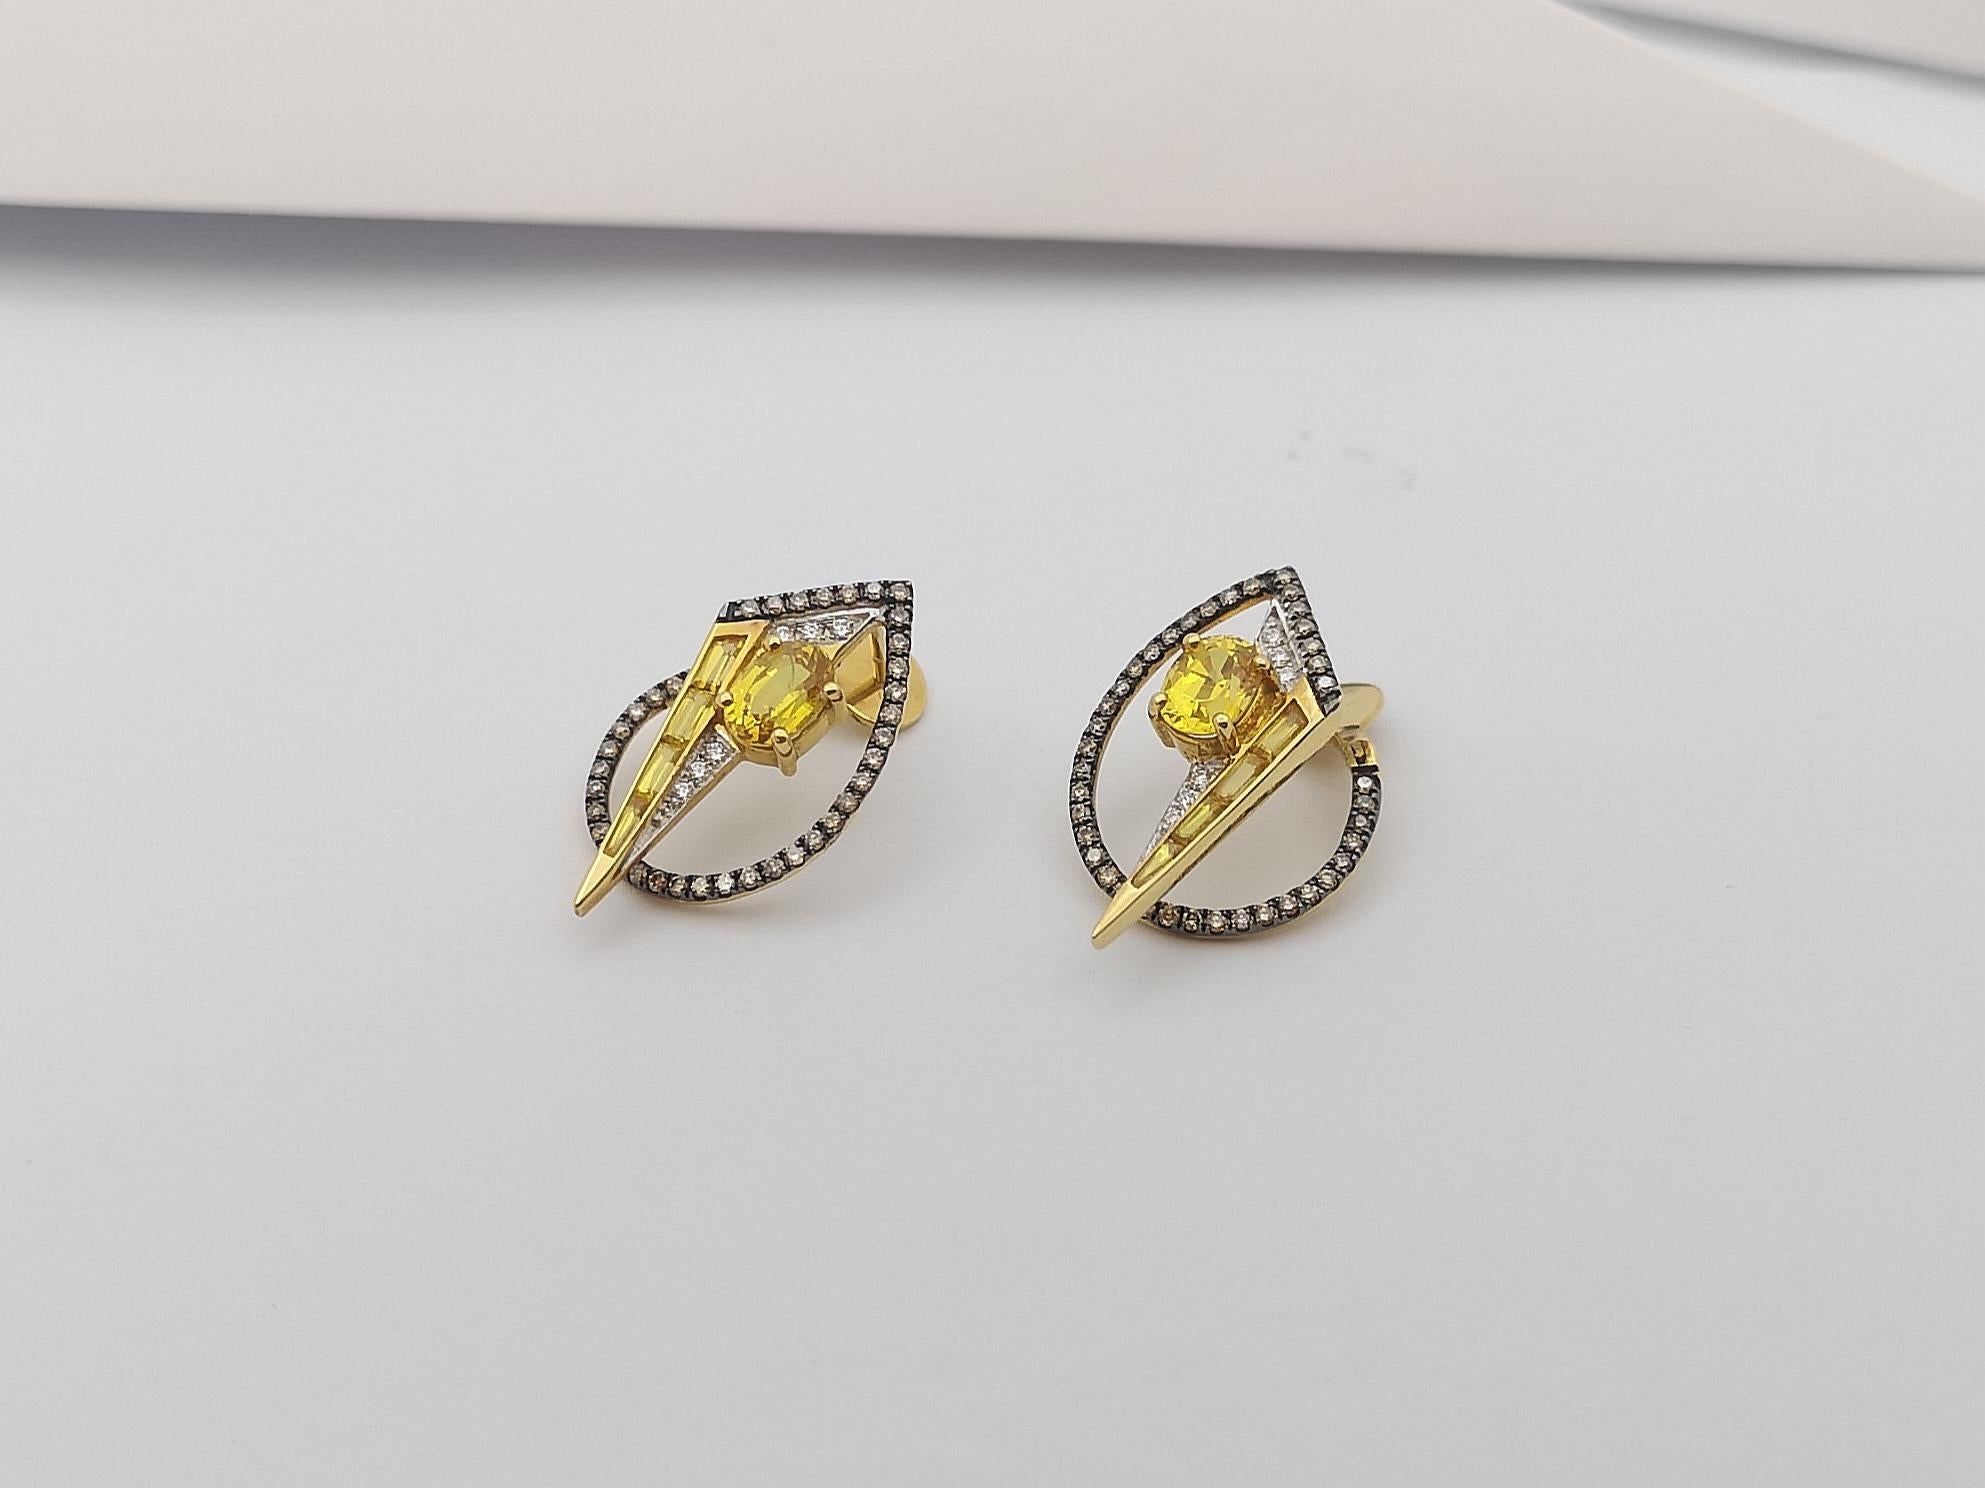 Yellow Sapphire, Diamond, Brown Diamond Earrings in 18K Gold by Kavant & Sharart For Sale 2